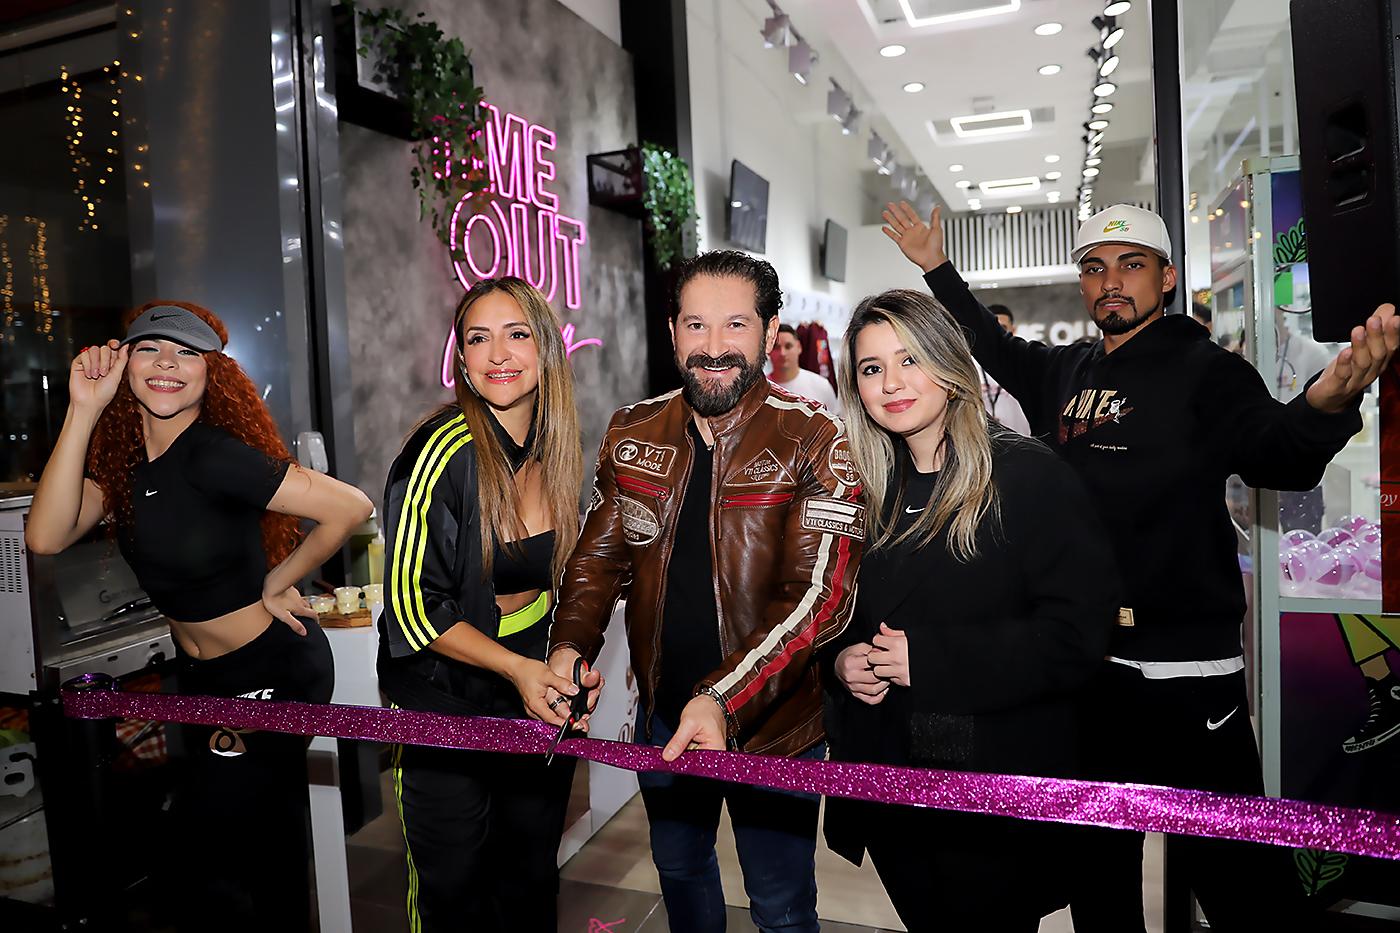 Time Out Coworking abre sus puertas en City Mall Tegucigalpa